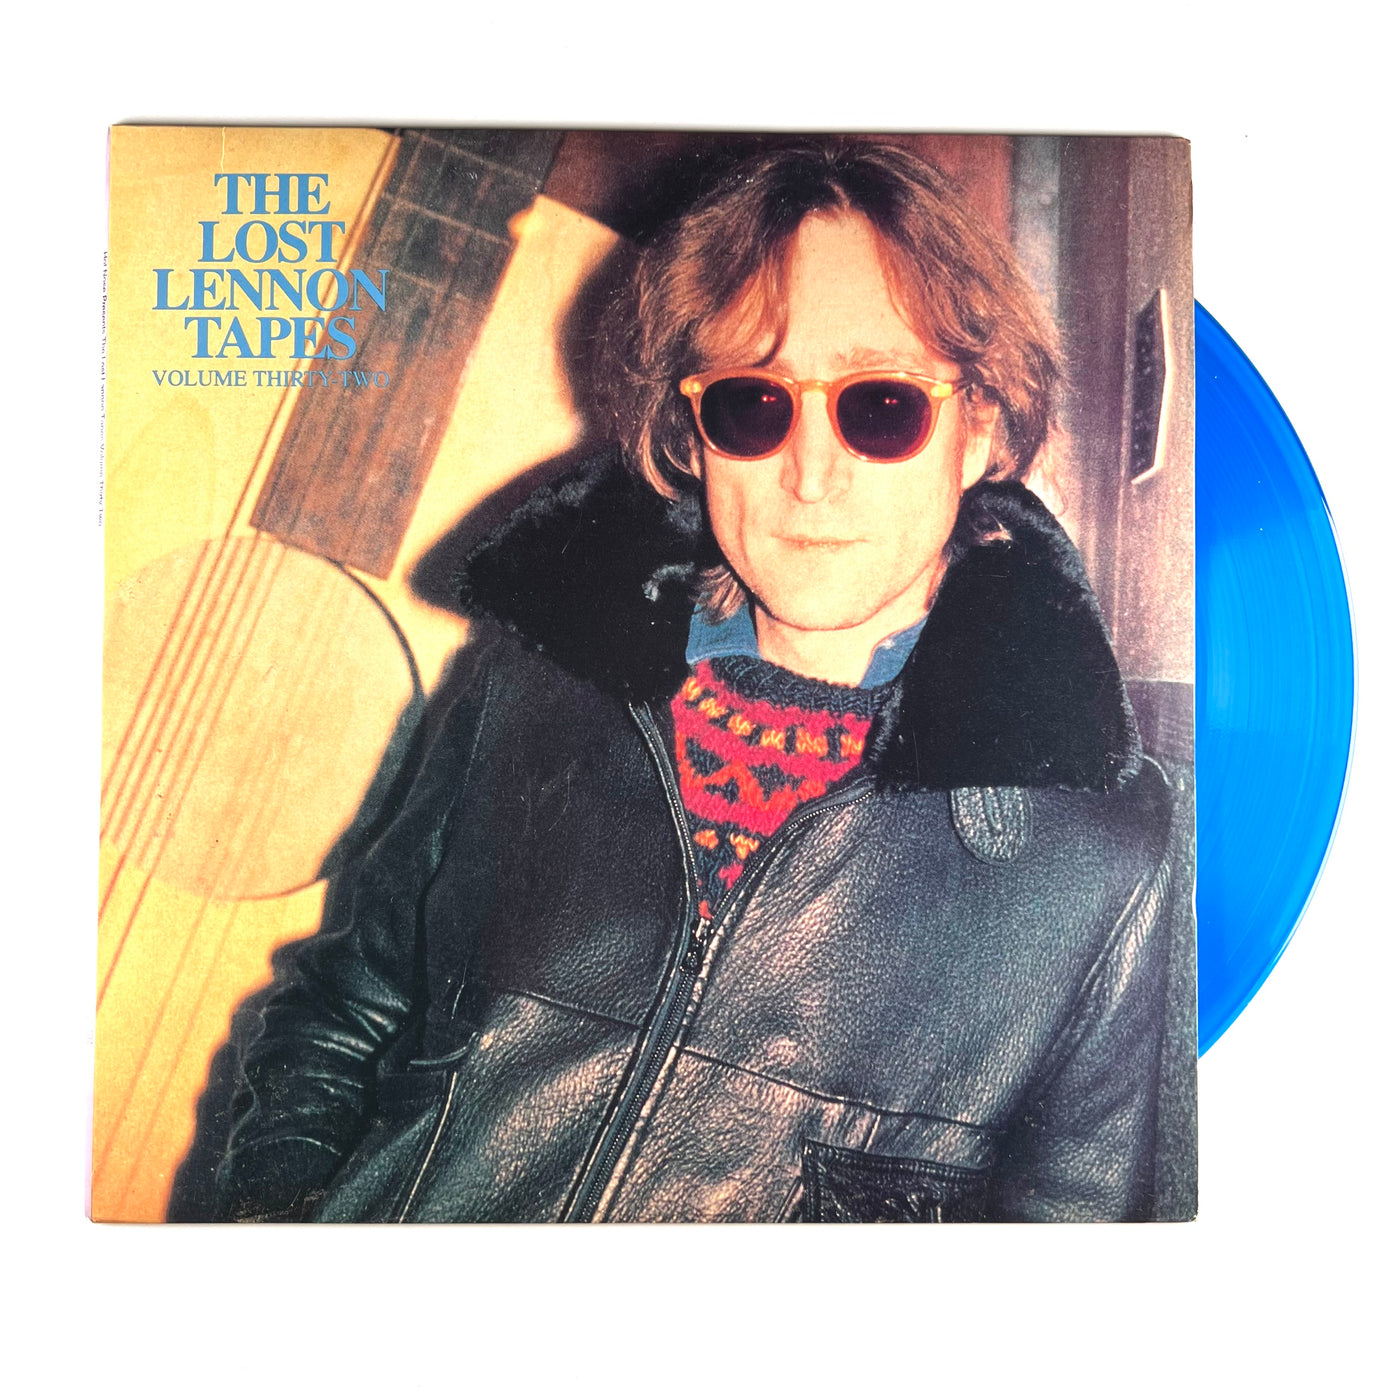 John Lennon - The Lost Lennon Tapes Volume Thirty-Two